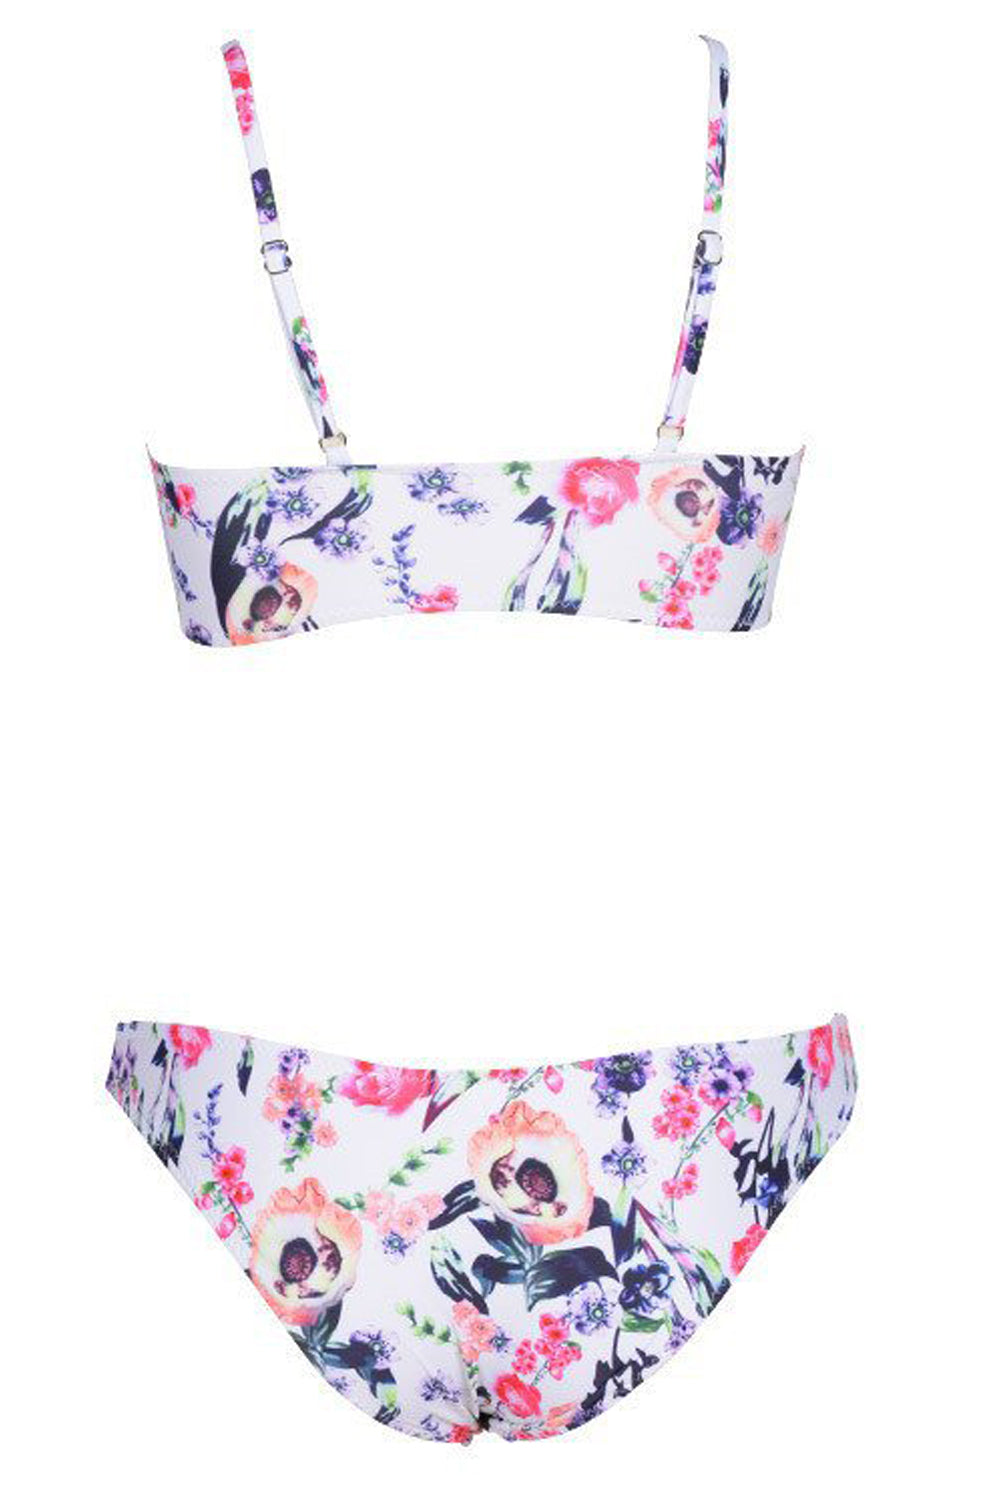 Iyasson Floral Print Tank Top Bikini Sets